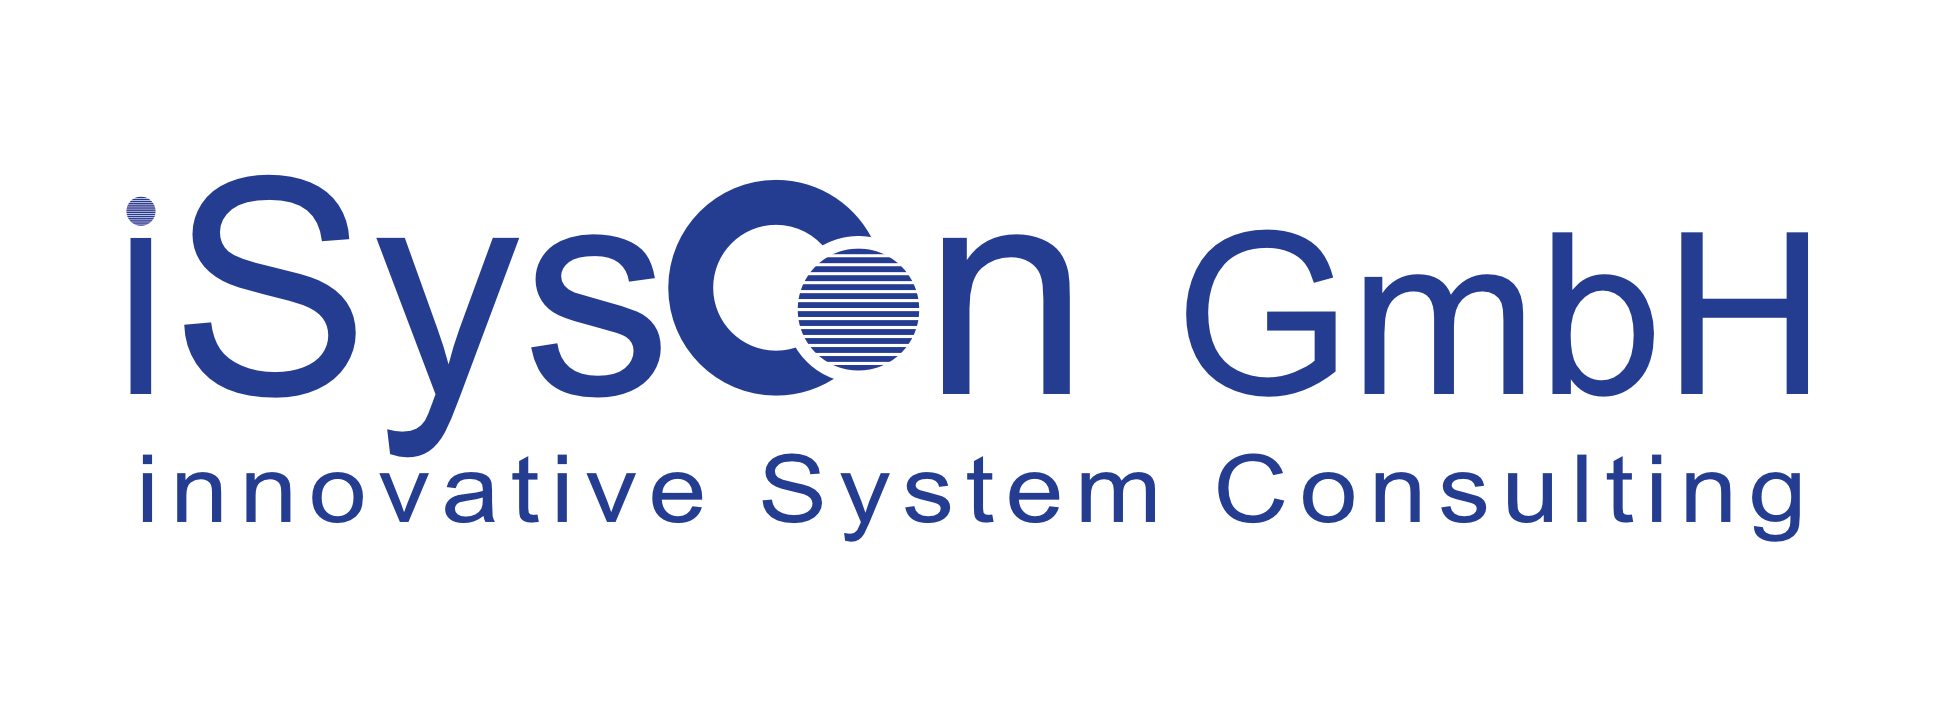 iSysCon GmbH -Logo